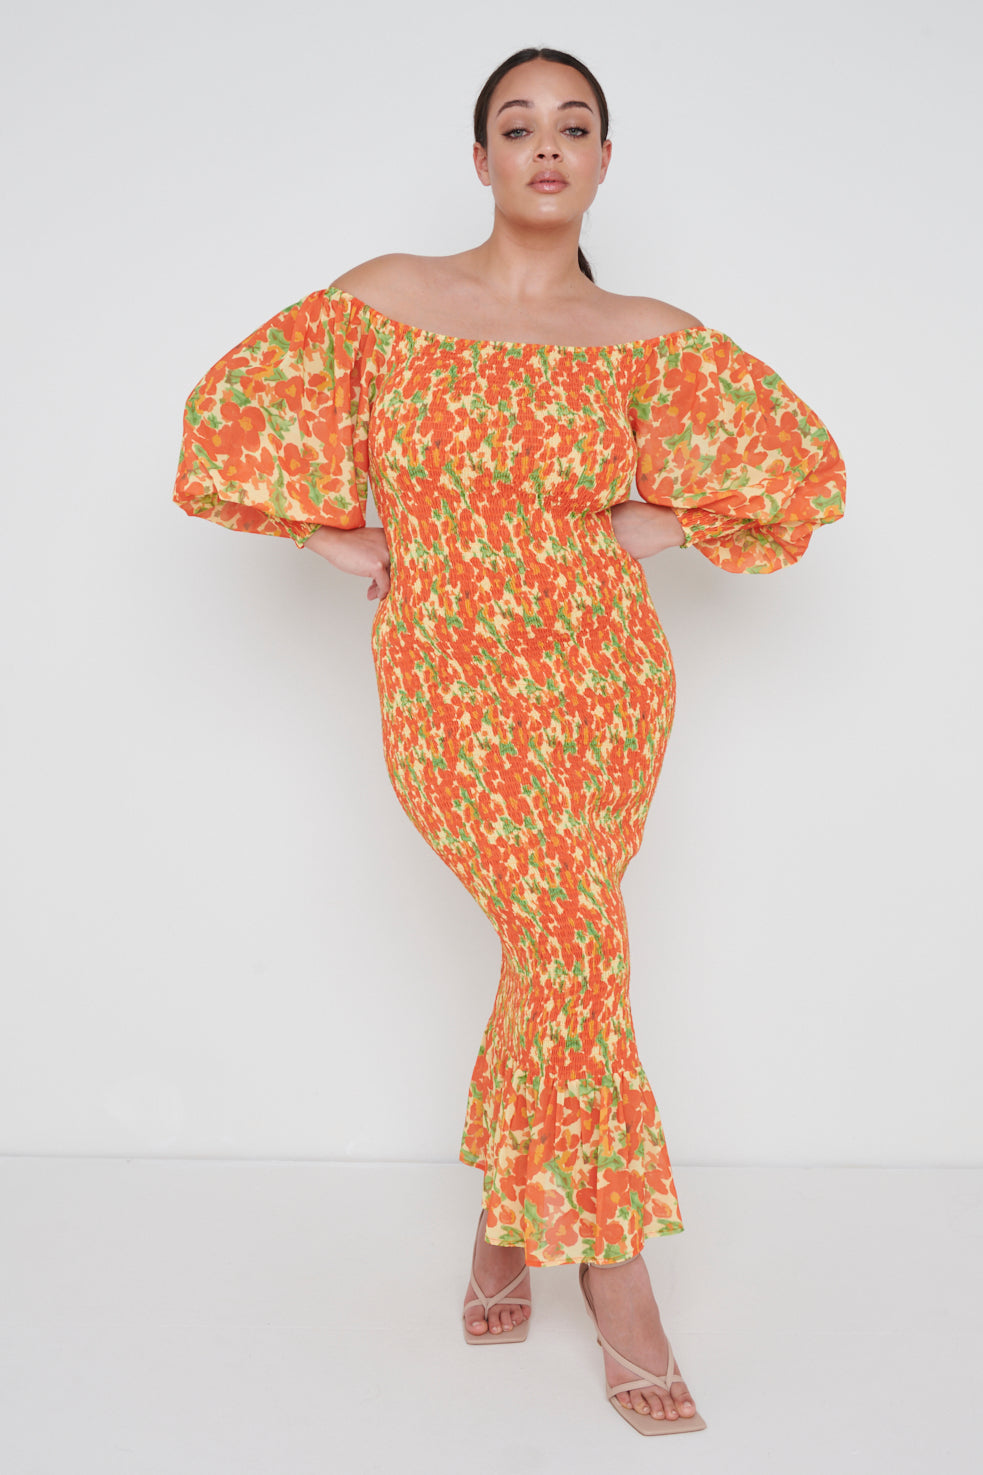 Leona Bardot Shirred Midaxi Dress Curve - Orange and Yellow Floral